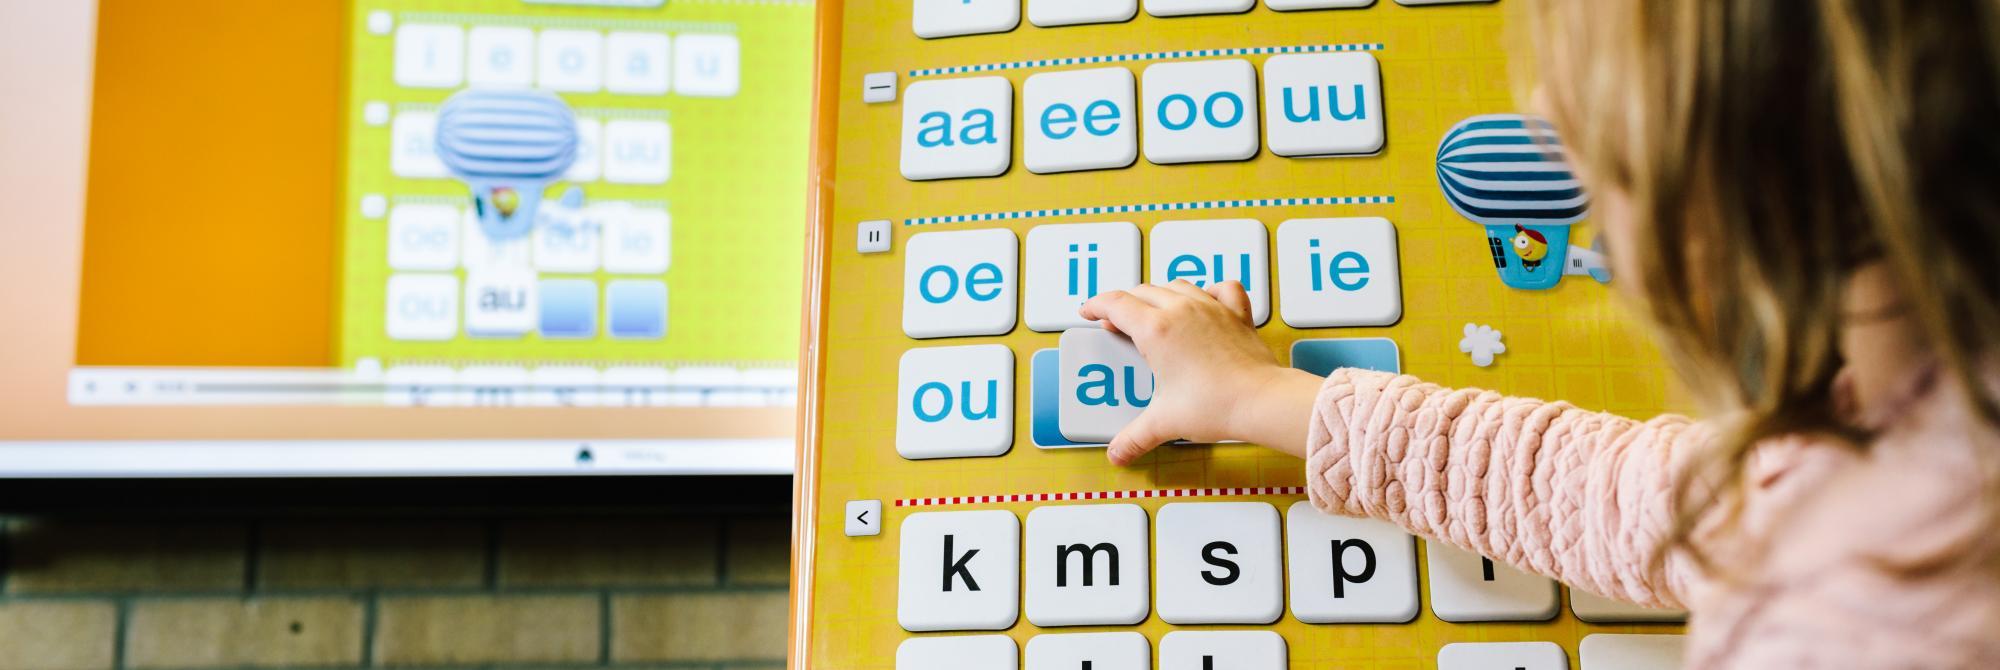 Kind legt letters op smartbord